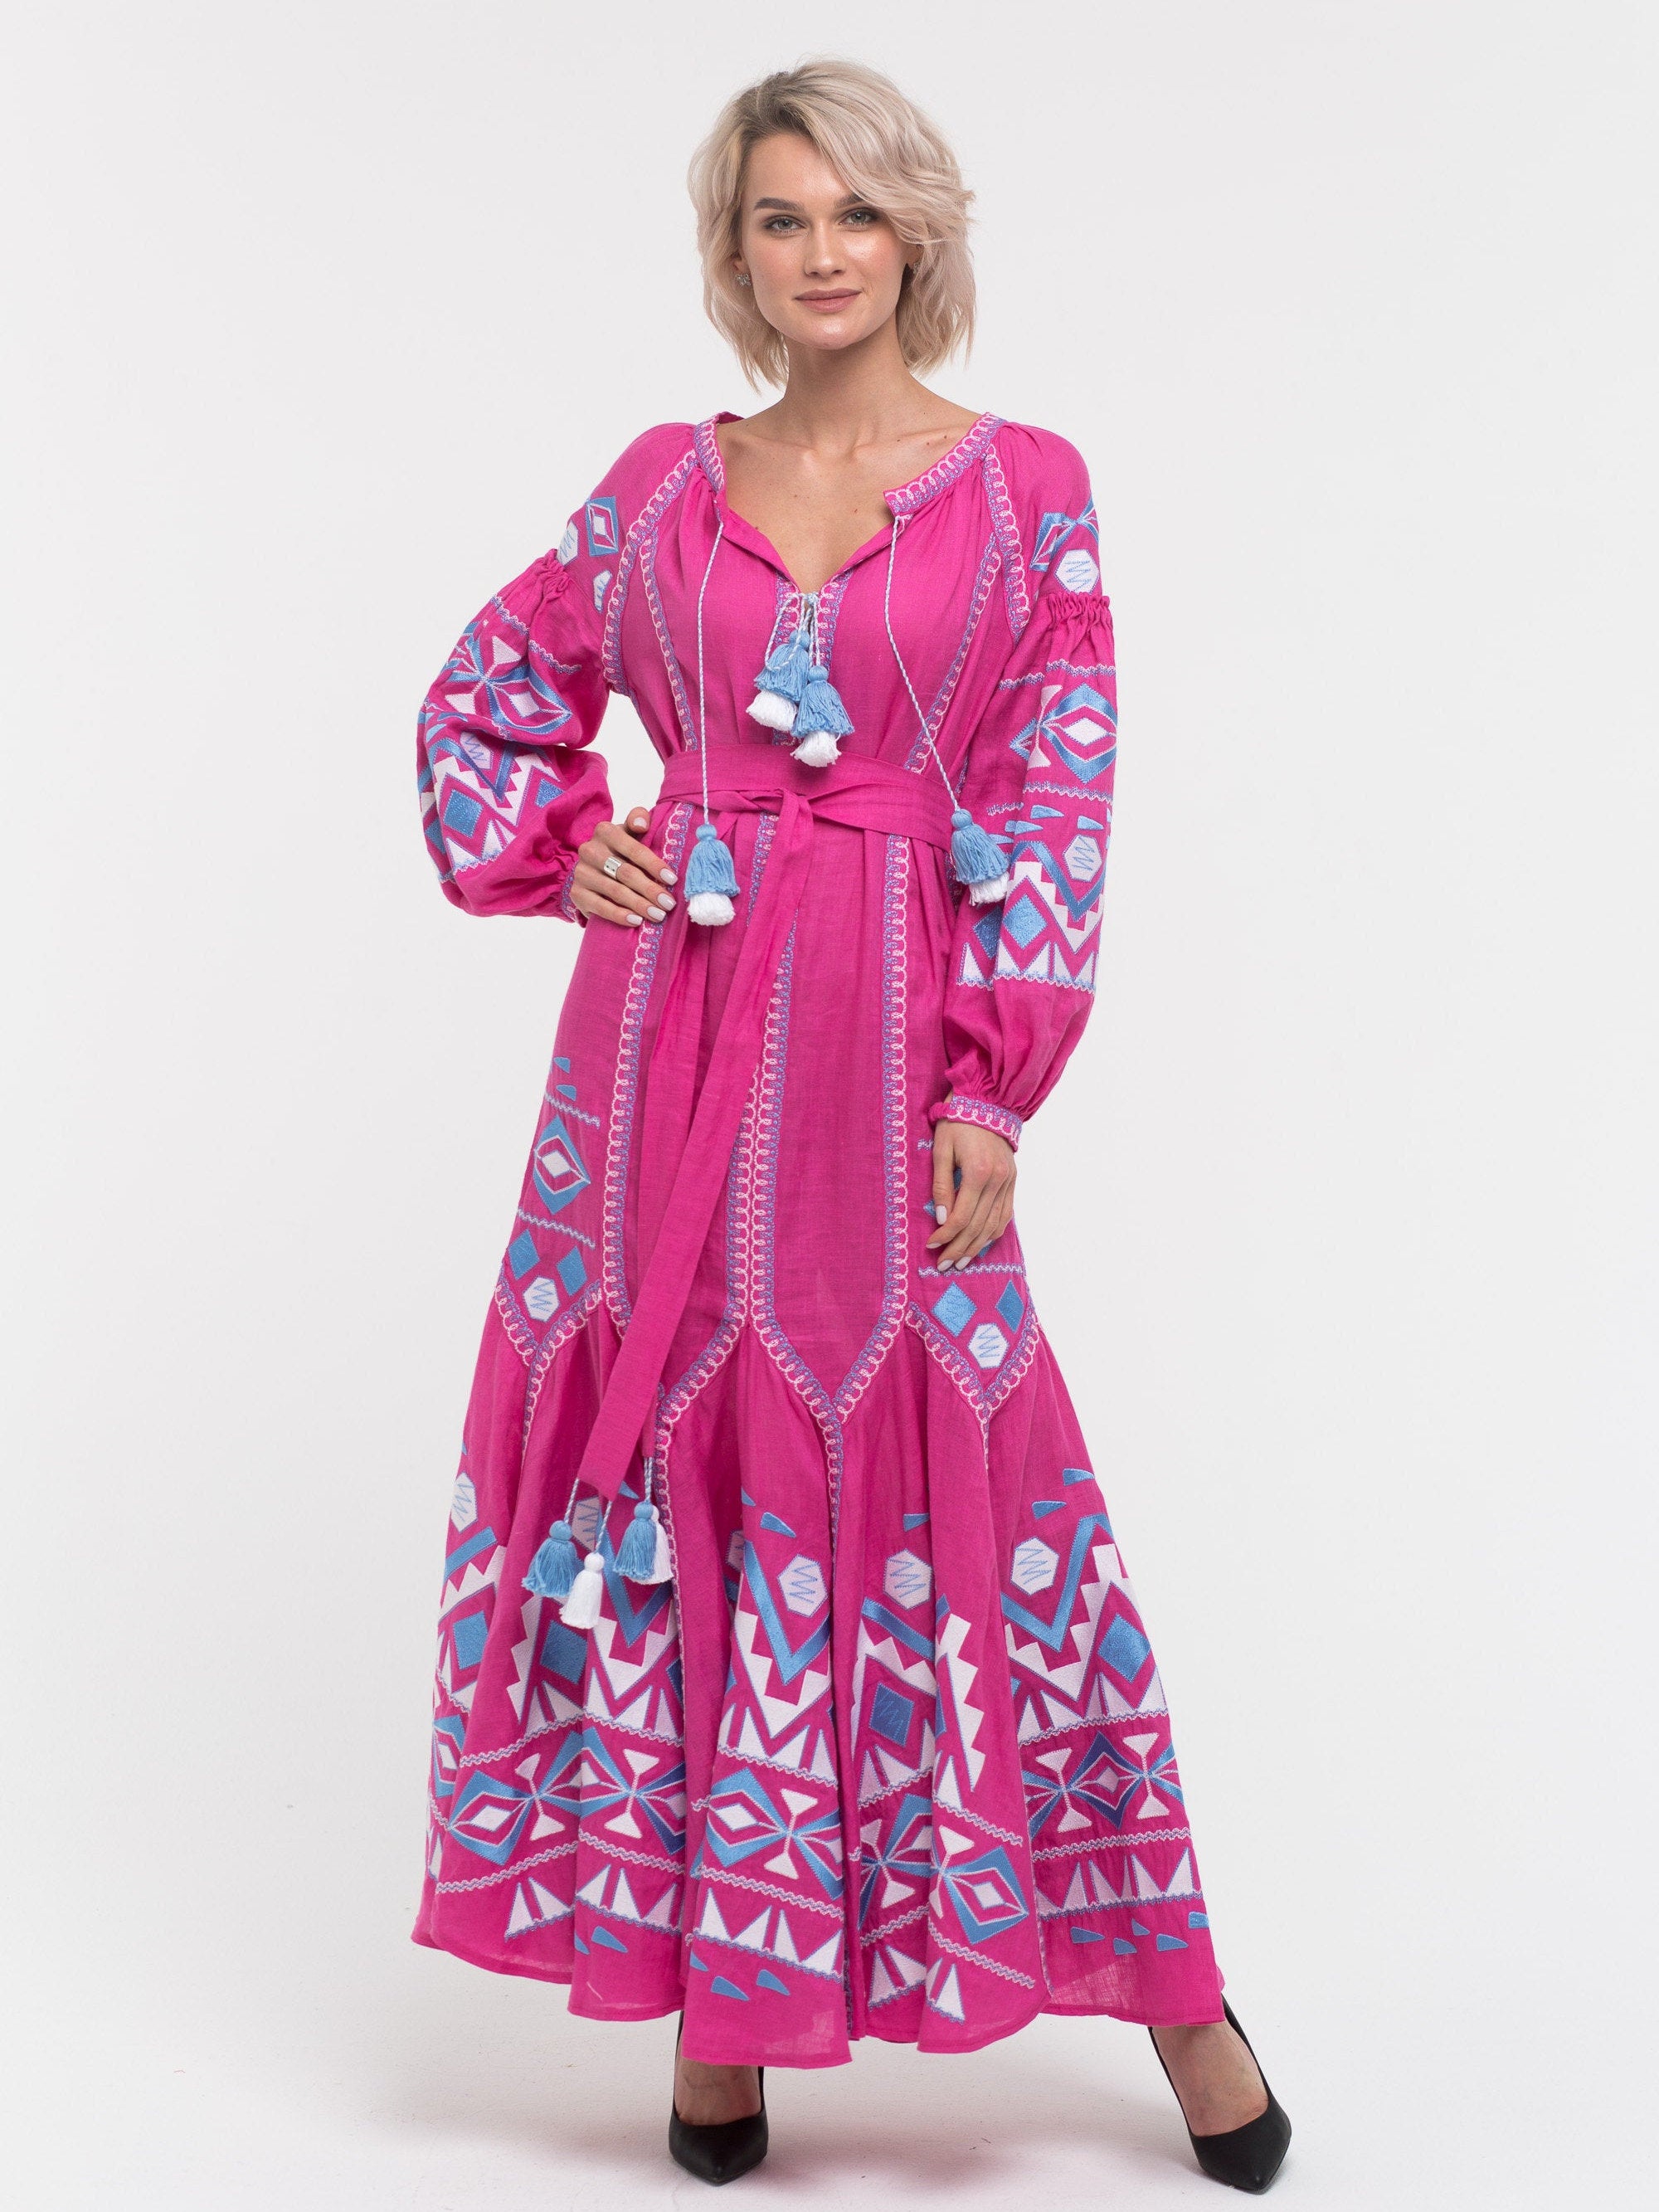 Pink mermaid embroidered wedding dress Ukrainian fashion gown